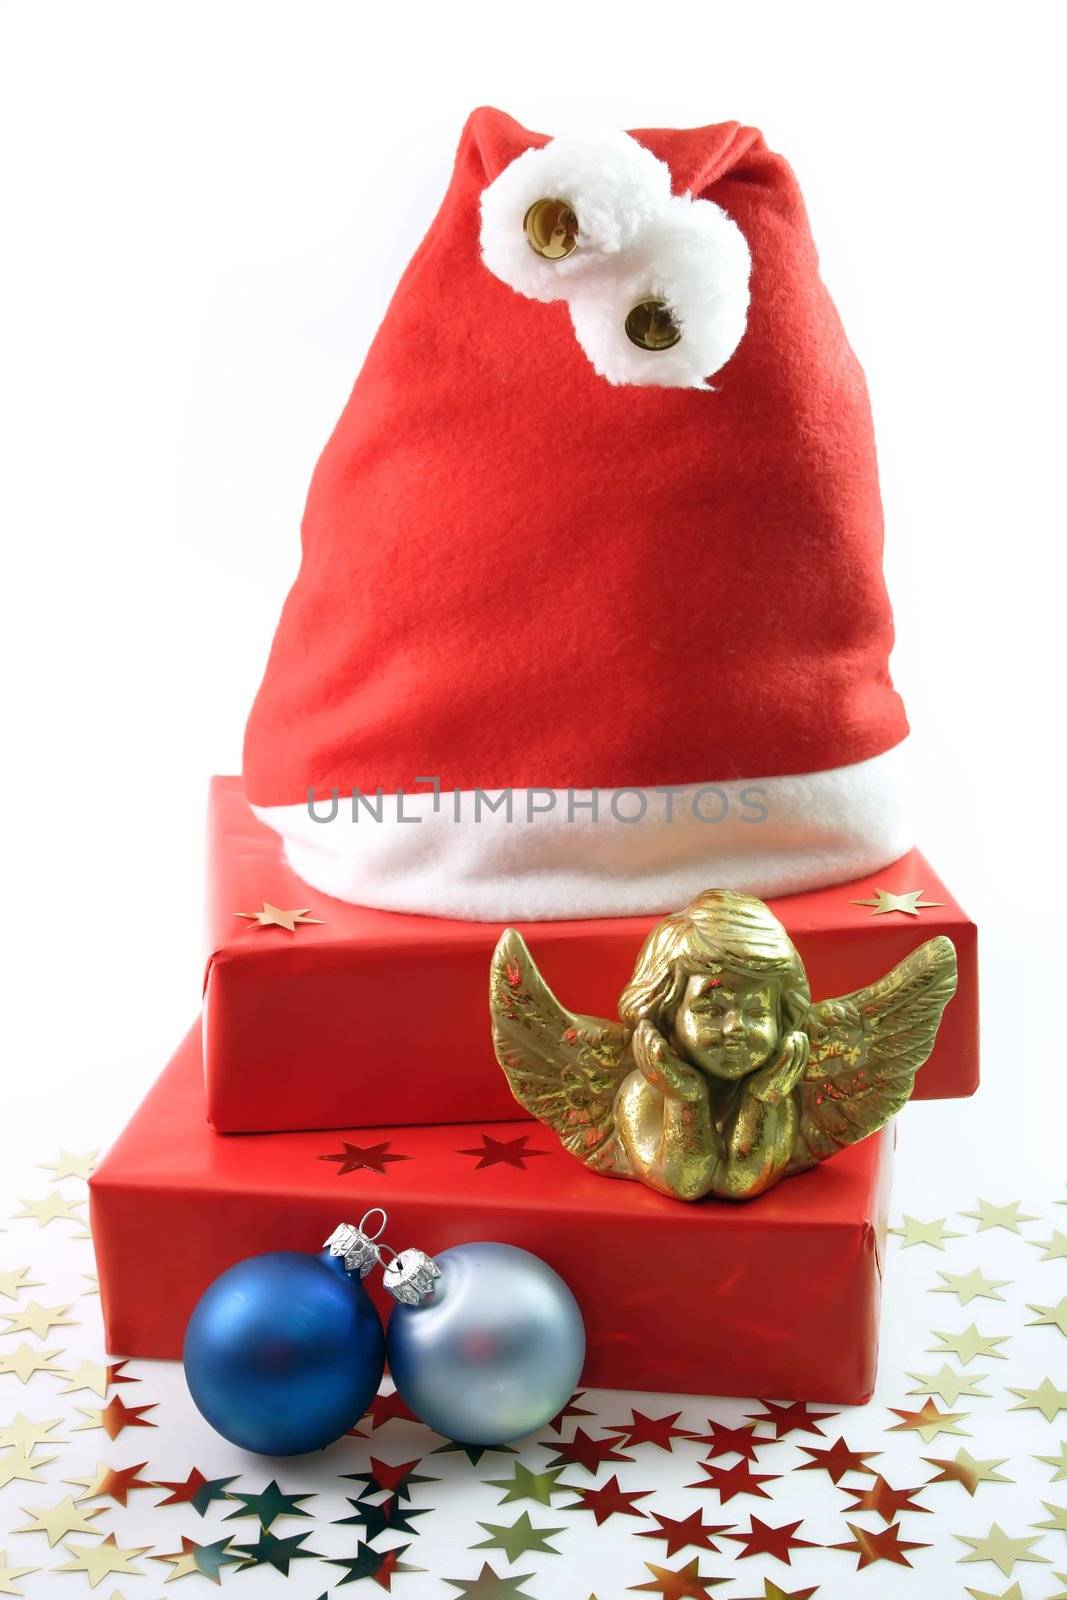 Santa Hat, red presents, golden angel figure, blue chrismas tree balls on light background